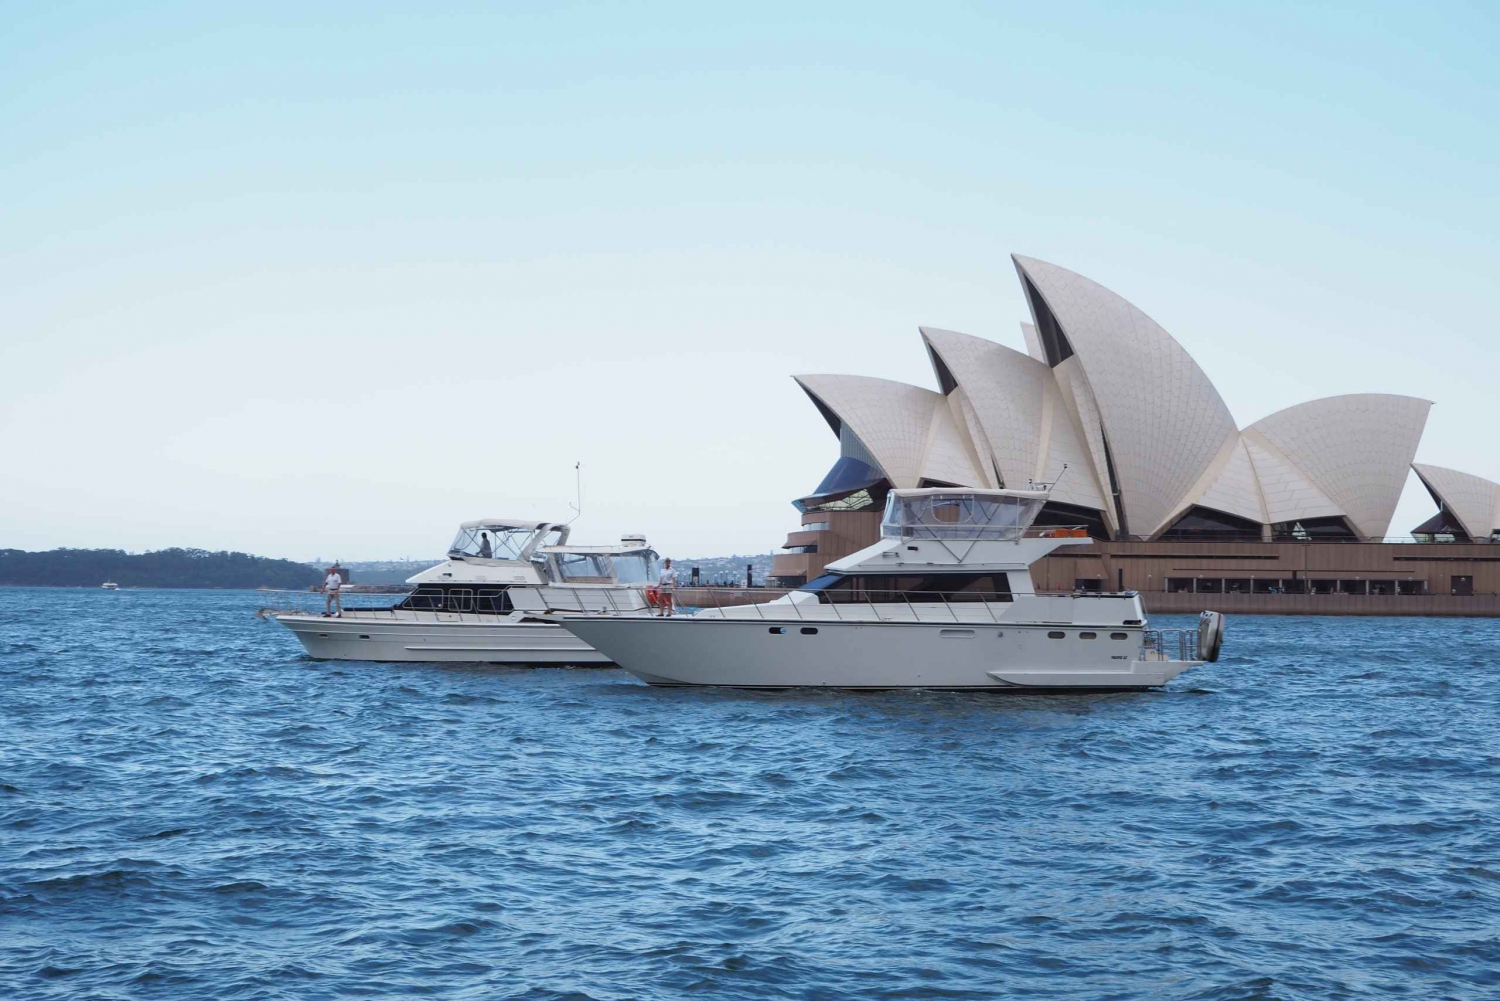 Sydney: Bootstour & Panorama-Sightseeing Tour